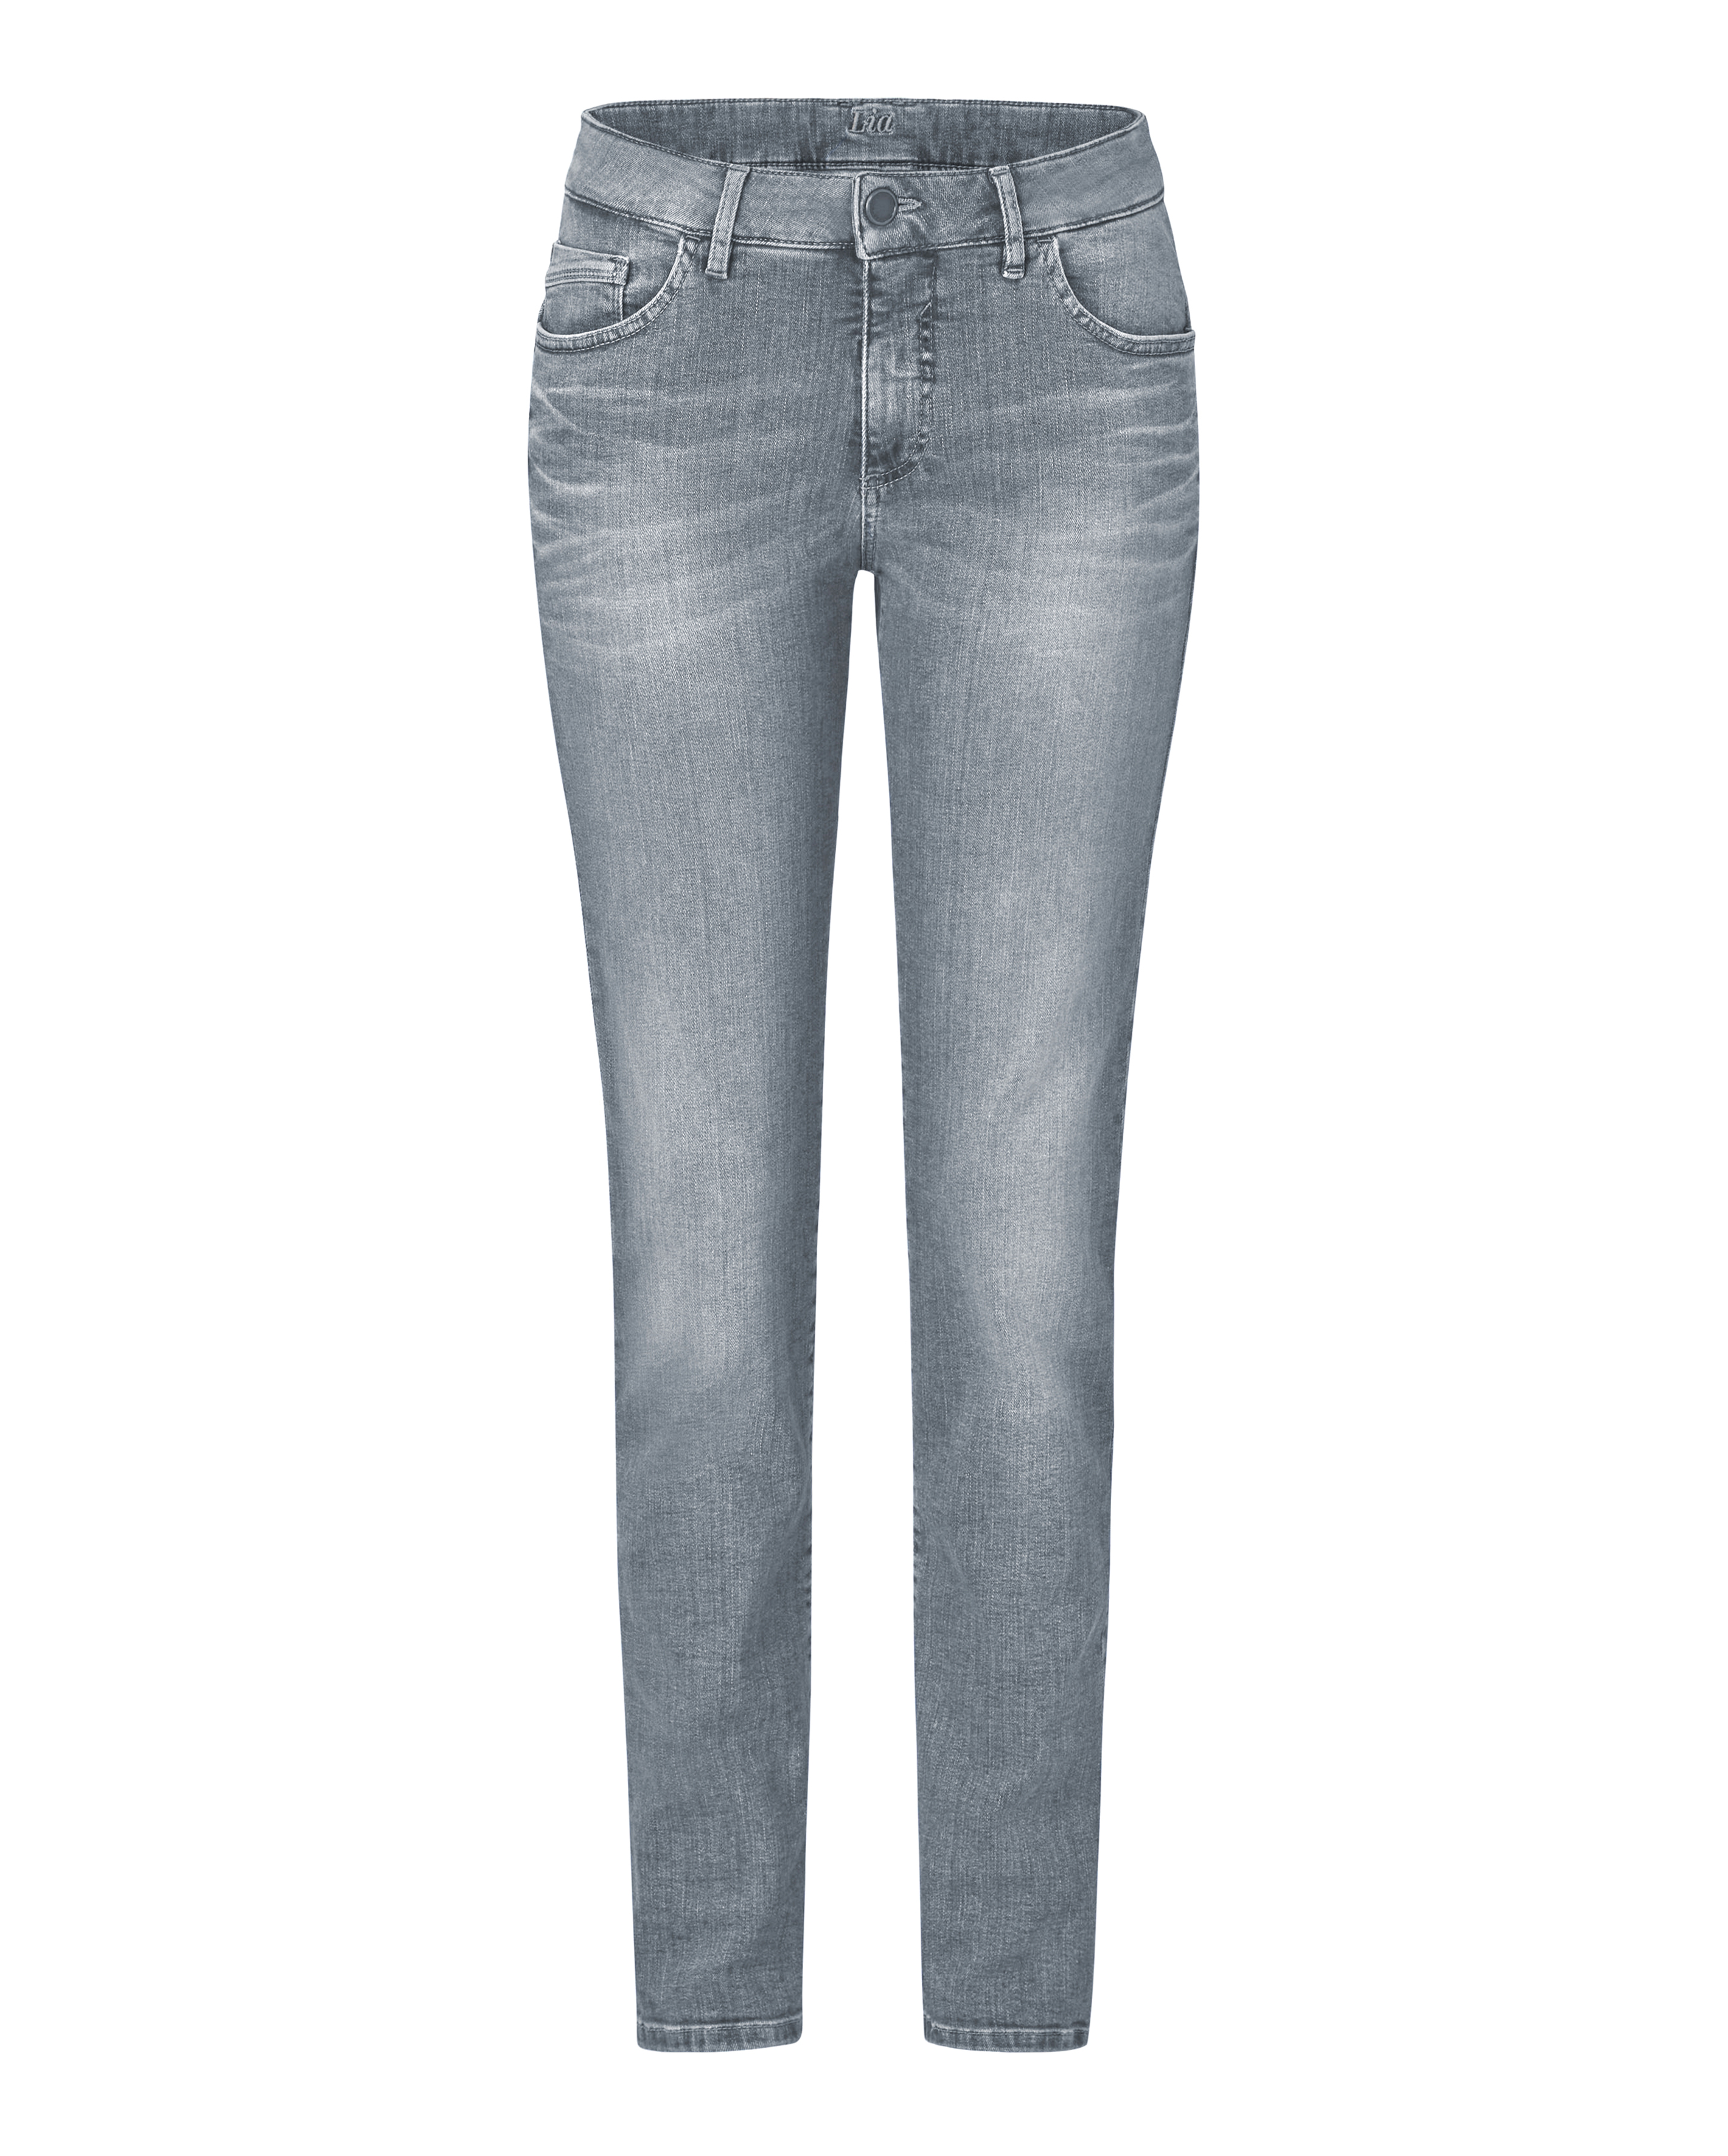 605397136000-1017_damen-jeans-slim-fit-stretch-denim-lia-paddocks_1.jpg